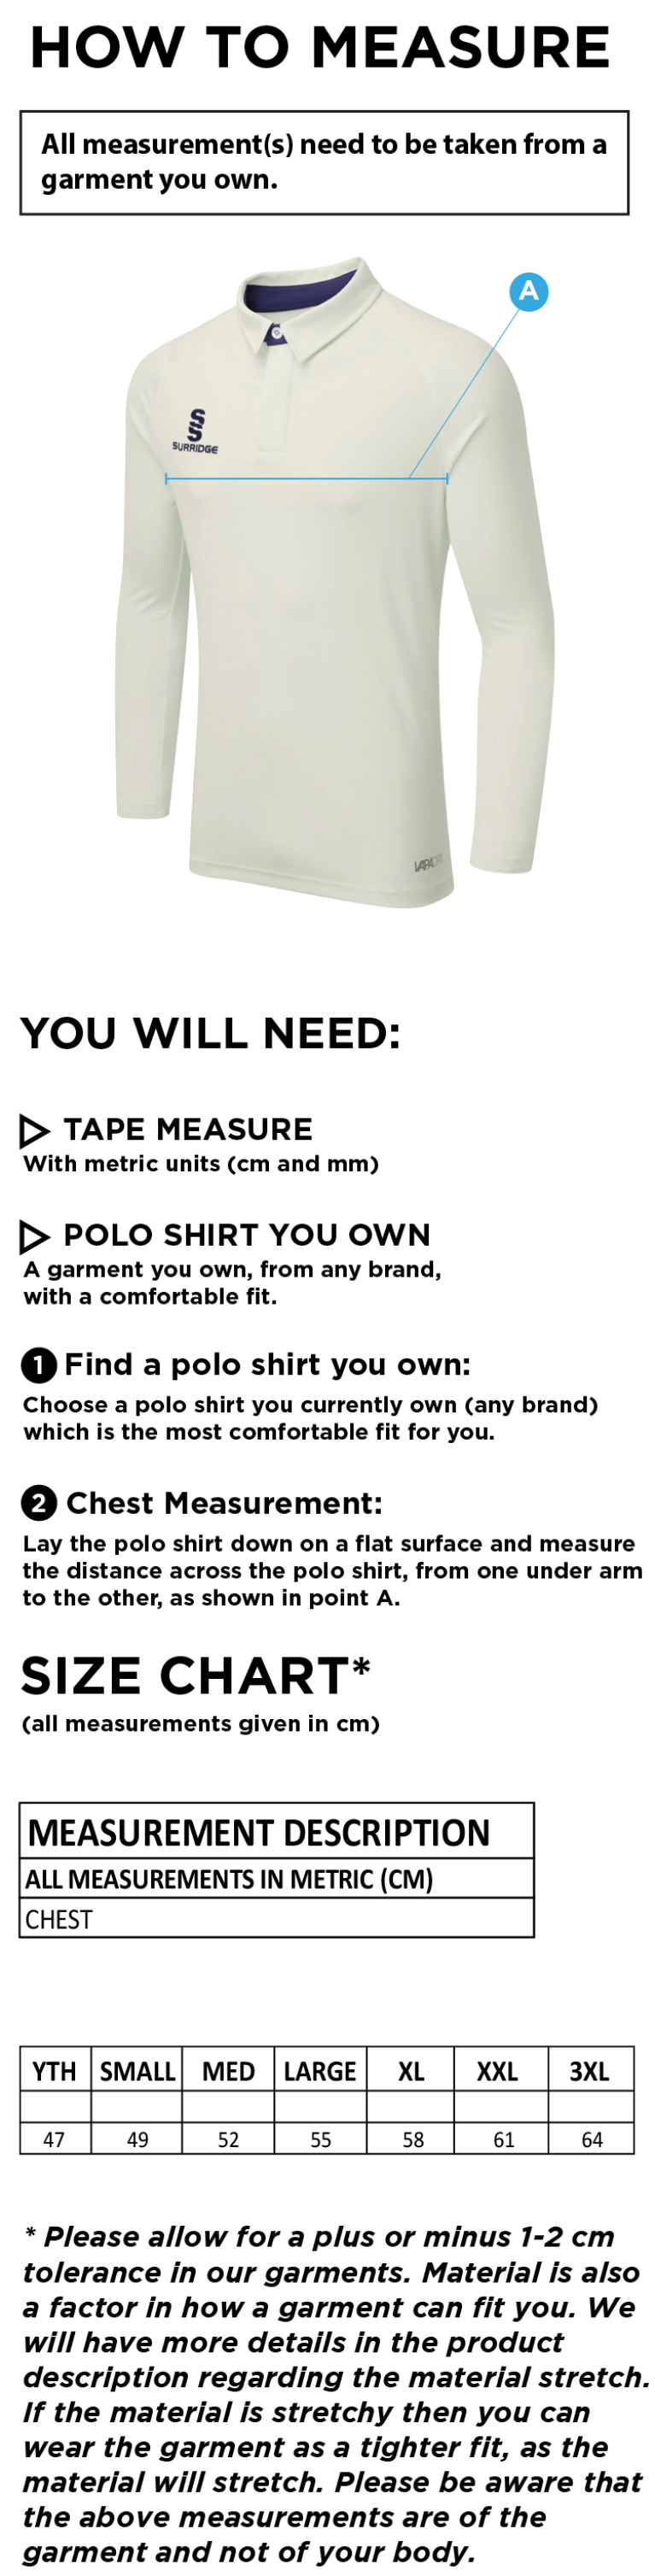 Nailsea CC - Tek Long Sleeve Playing Shirt - Size Guide